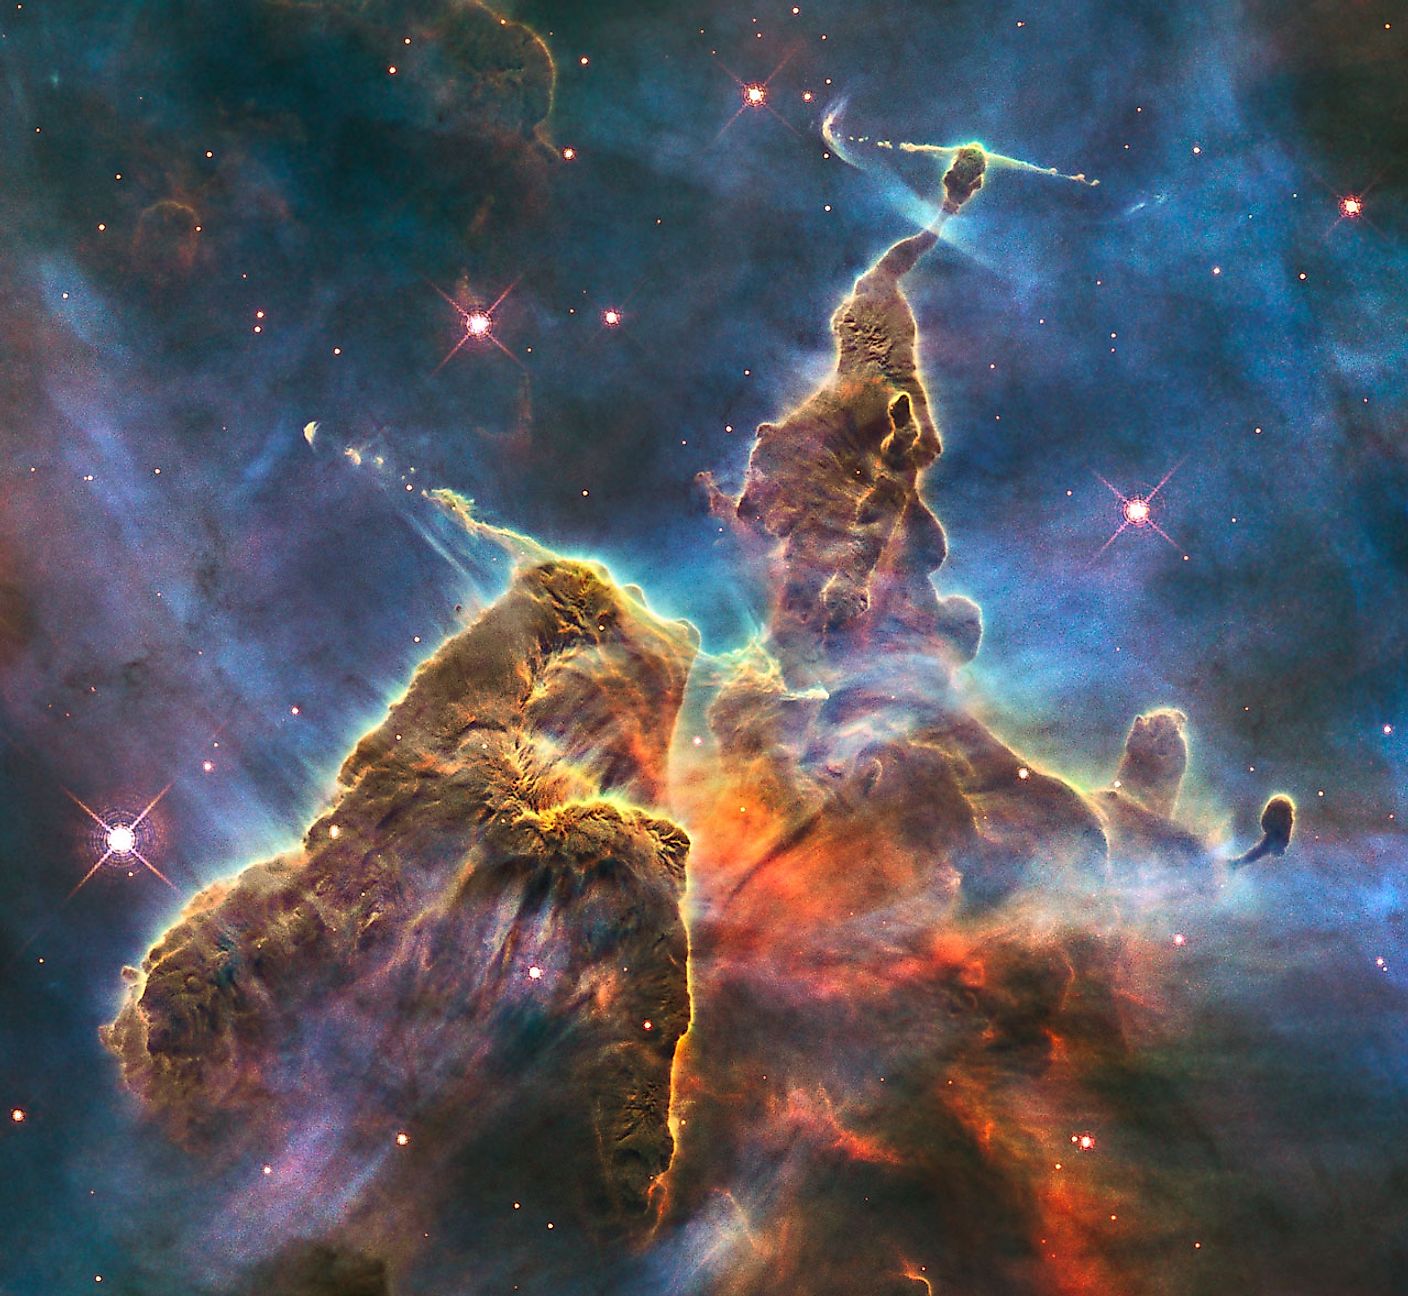 Hubble image of Mystic Mountain, a region in the Carina Nebula. Image credit: NASA/ESA